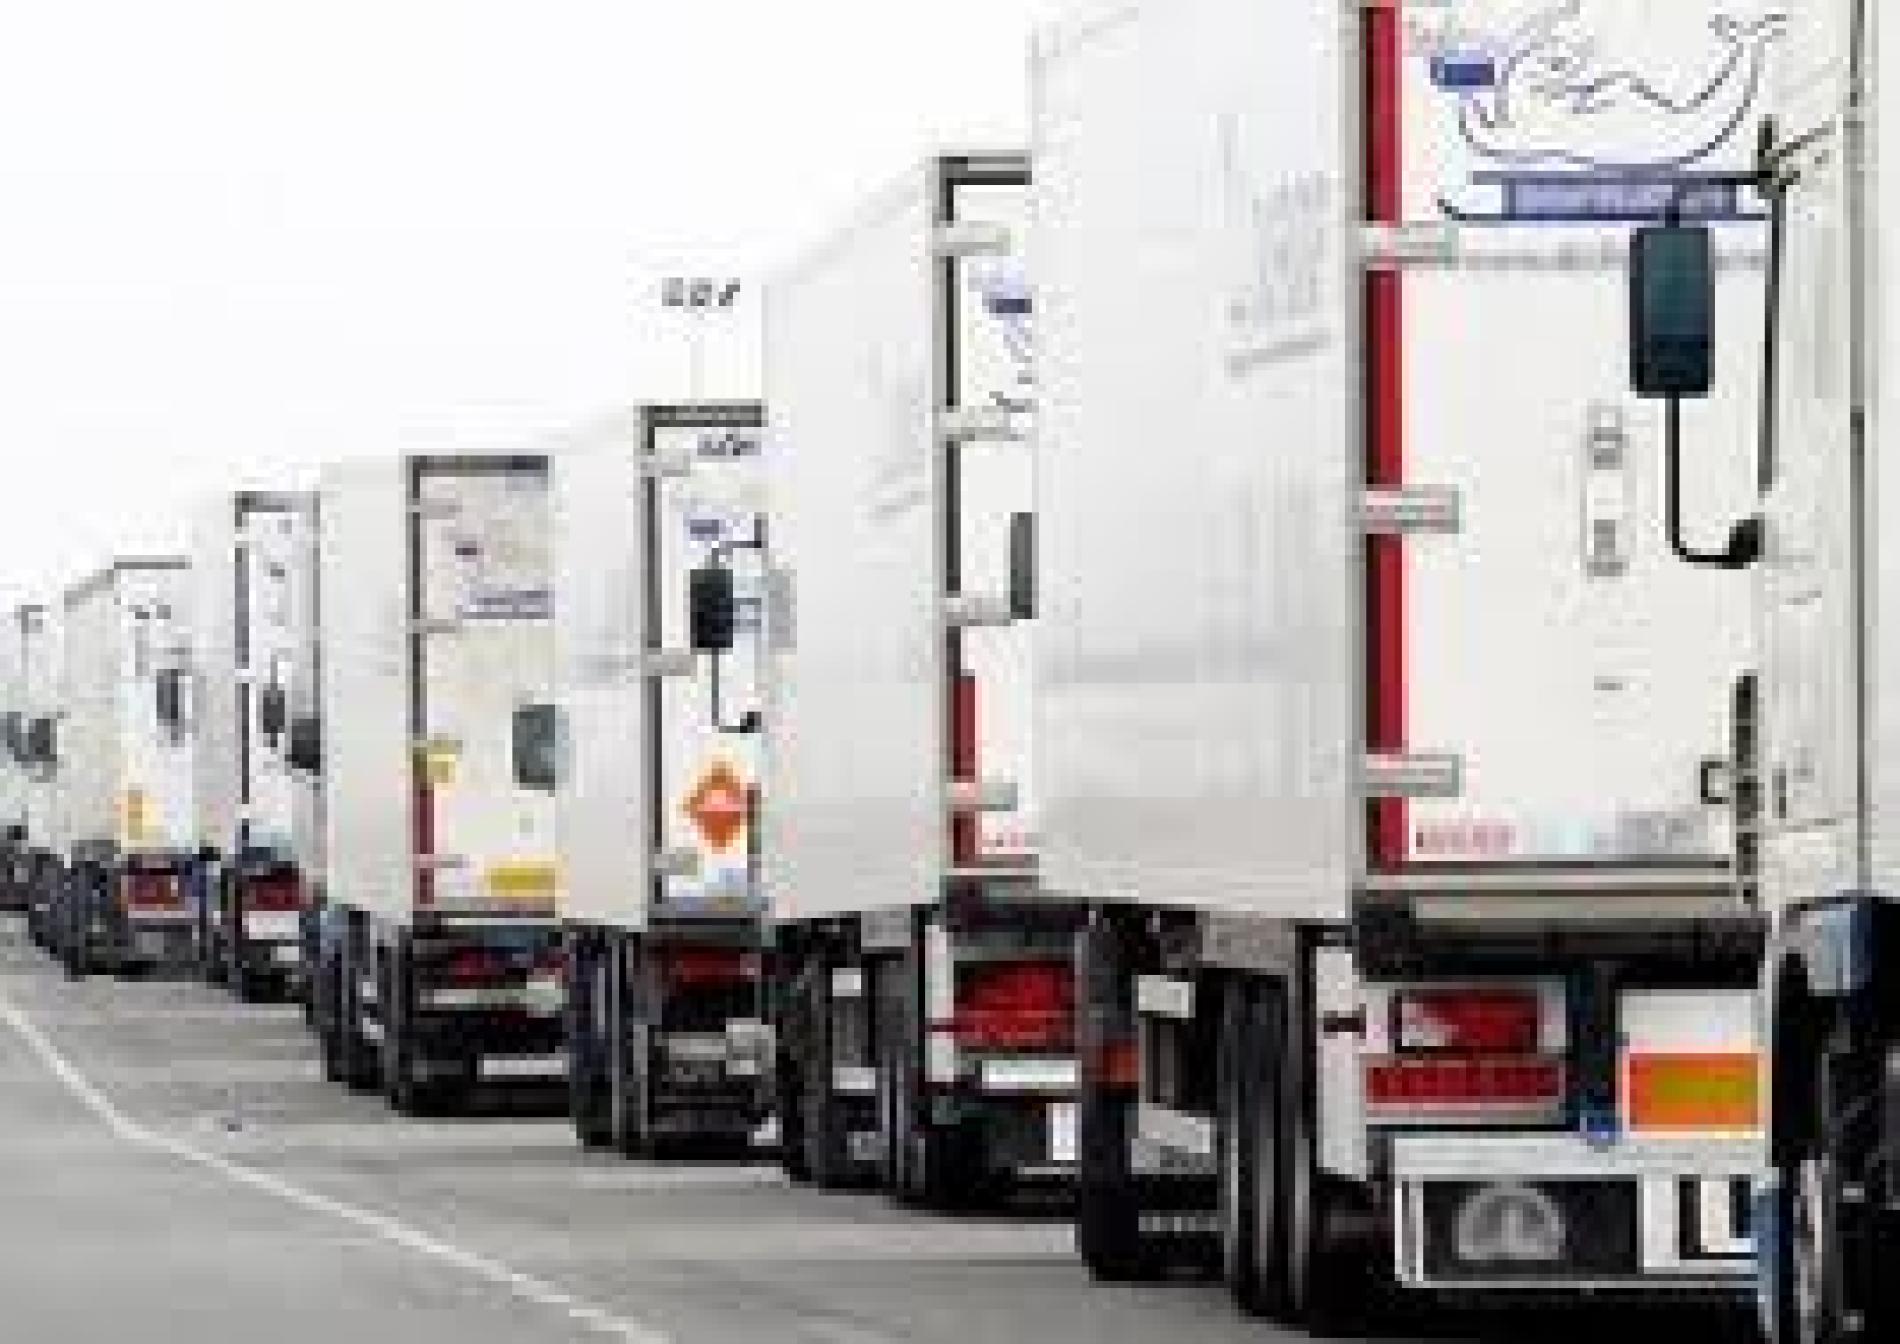 “Trasporti e logistica, dinamica negativa per le imprese”